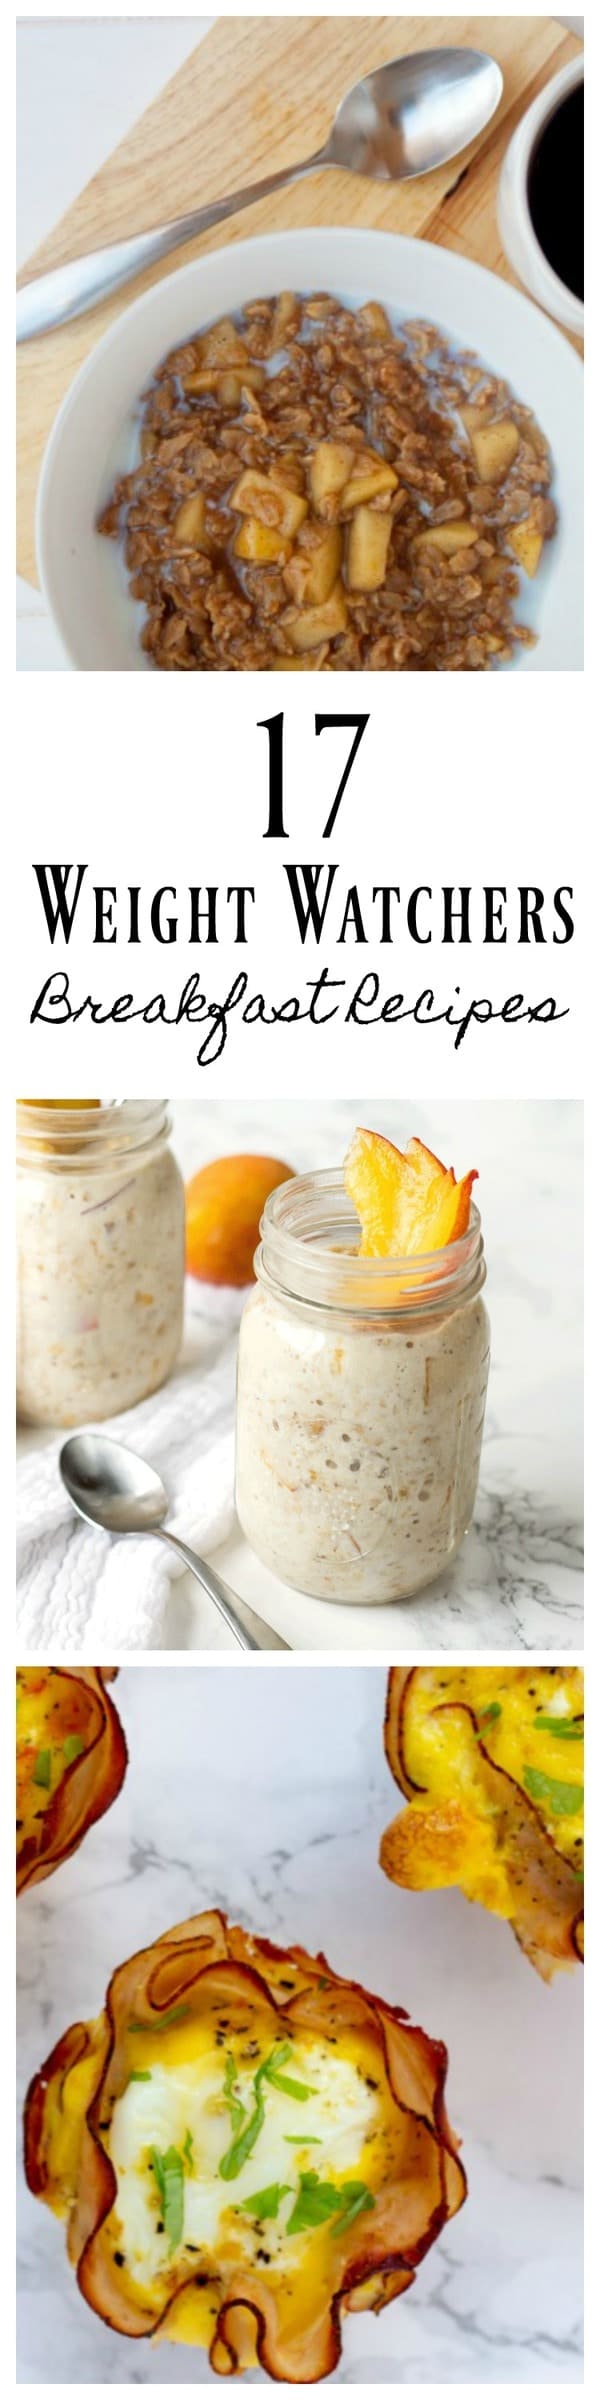 17 Weight Watchers Breakfast Recipes • MidgetMomma